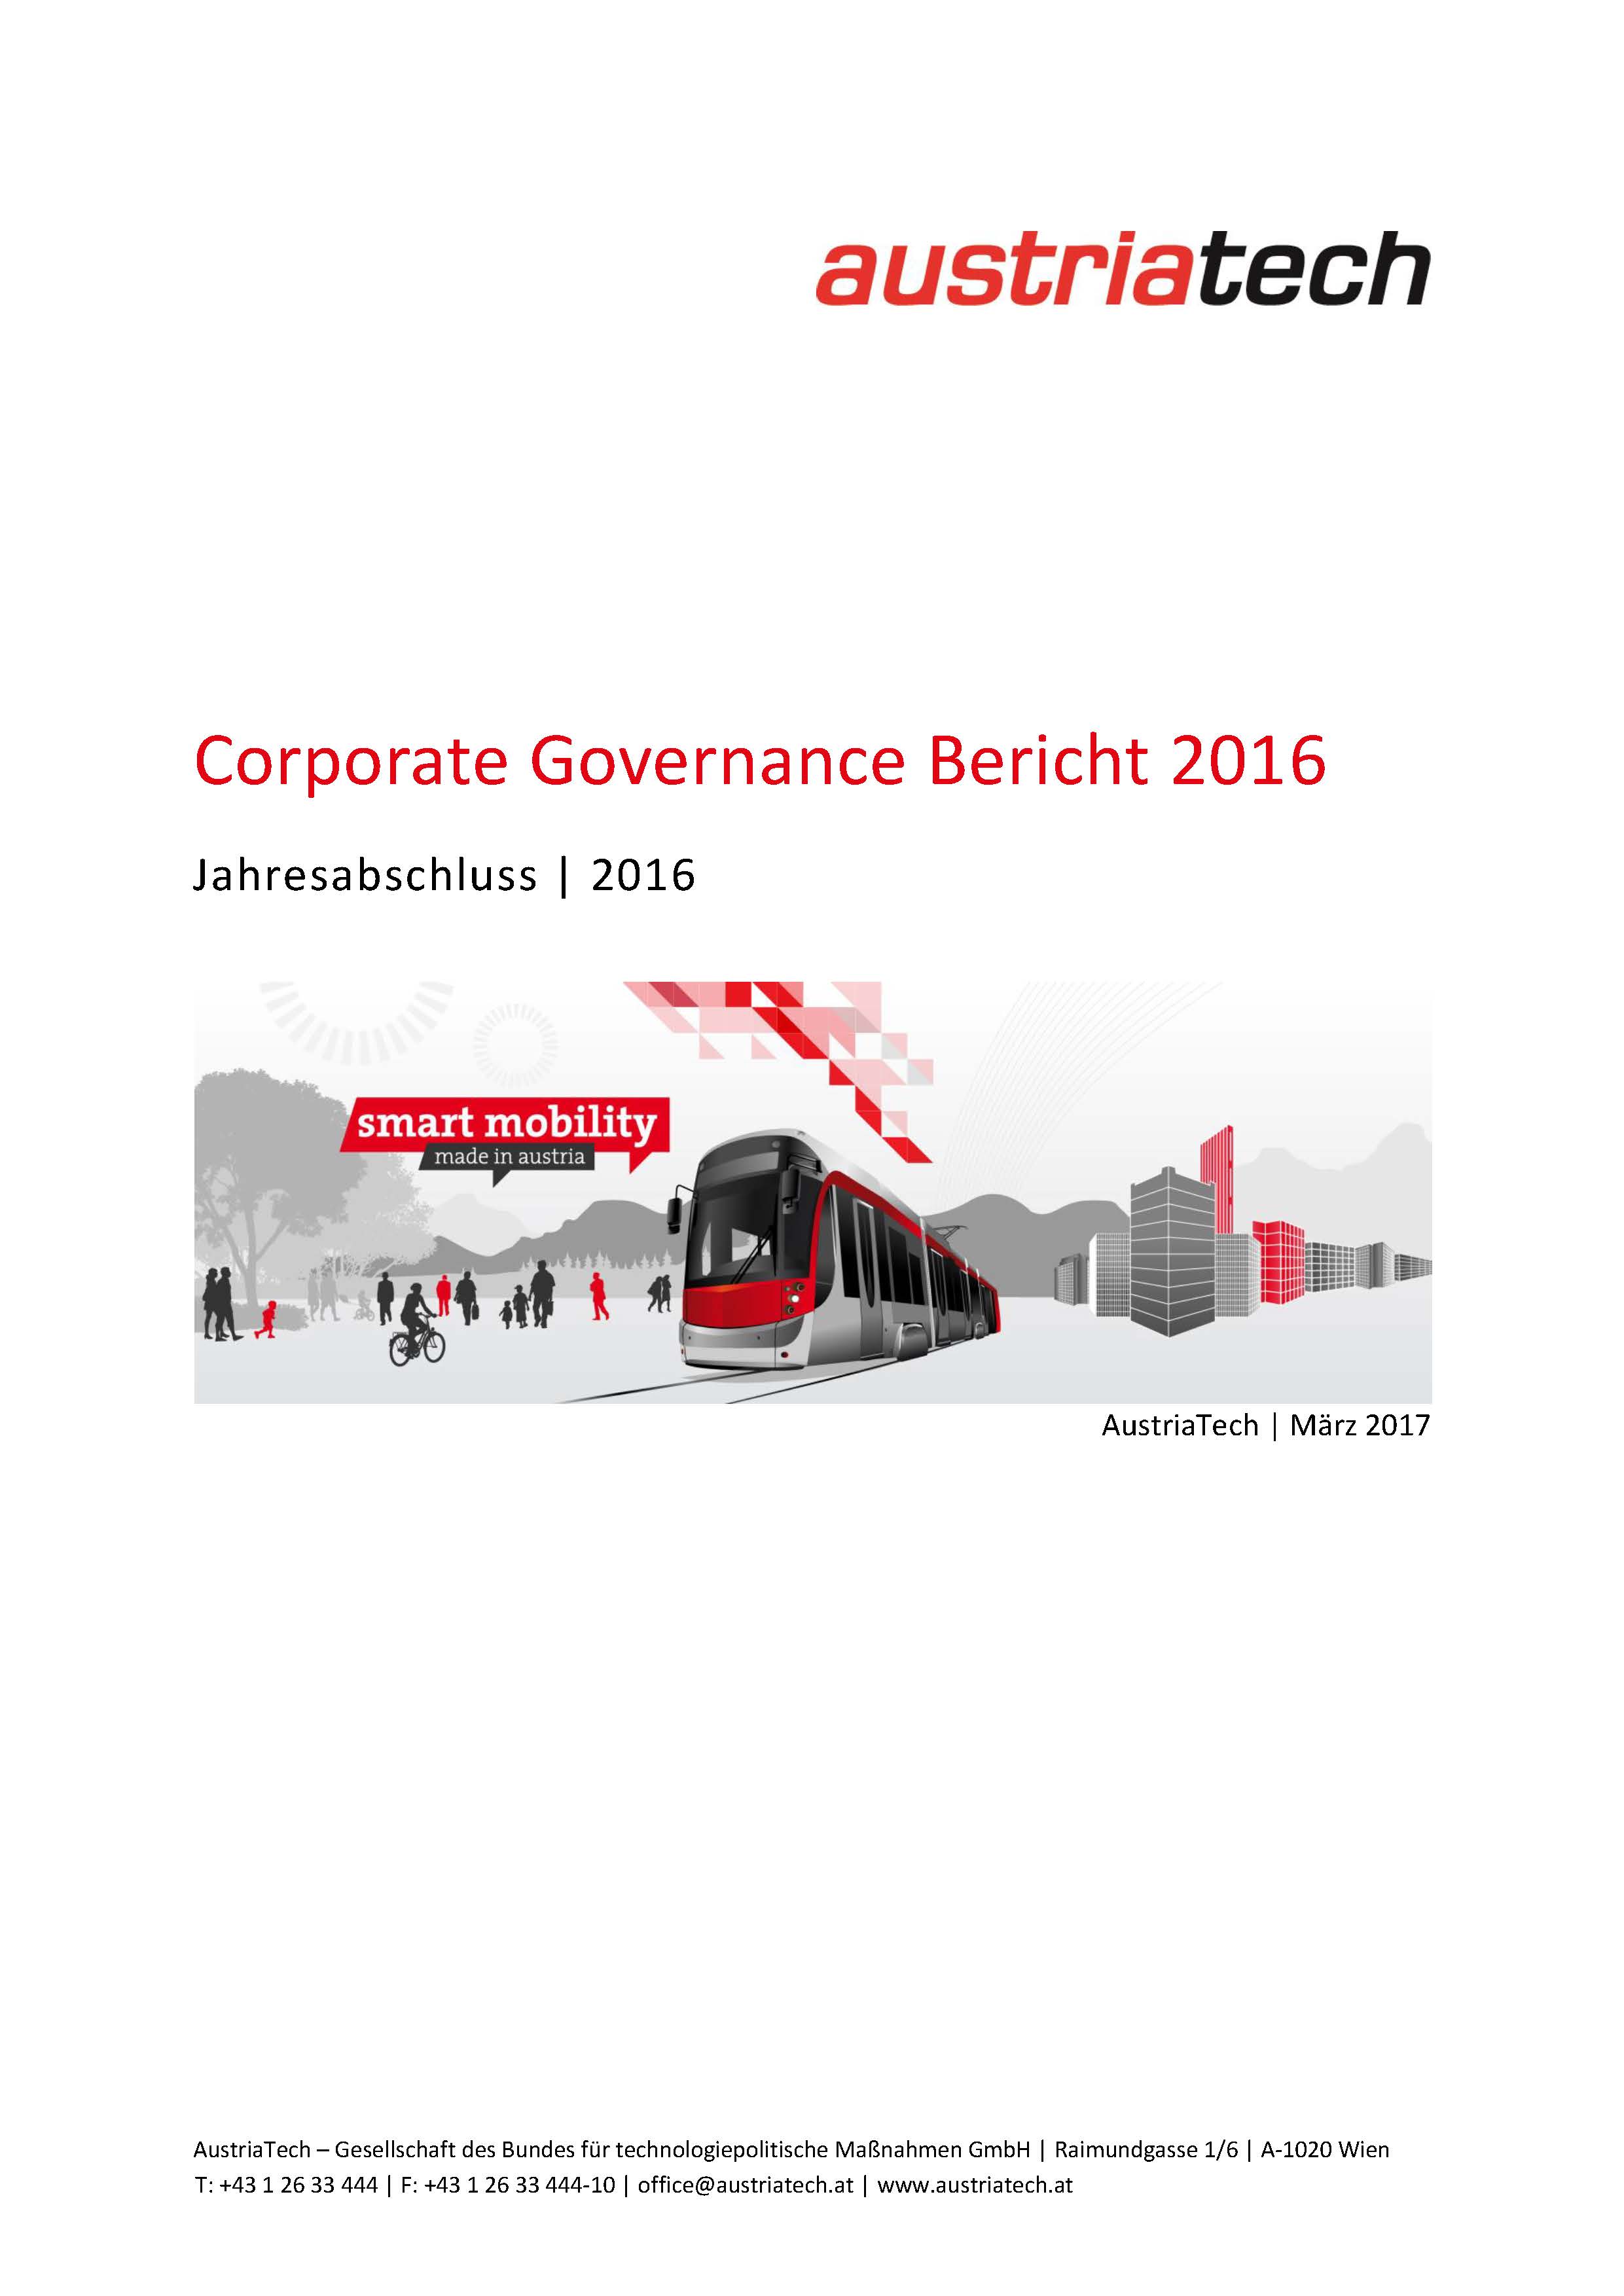 AustriaTech Corporate Governance 2016